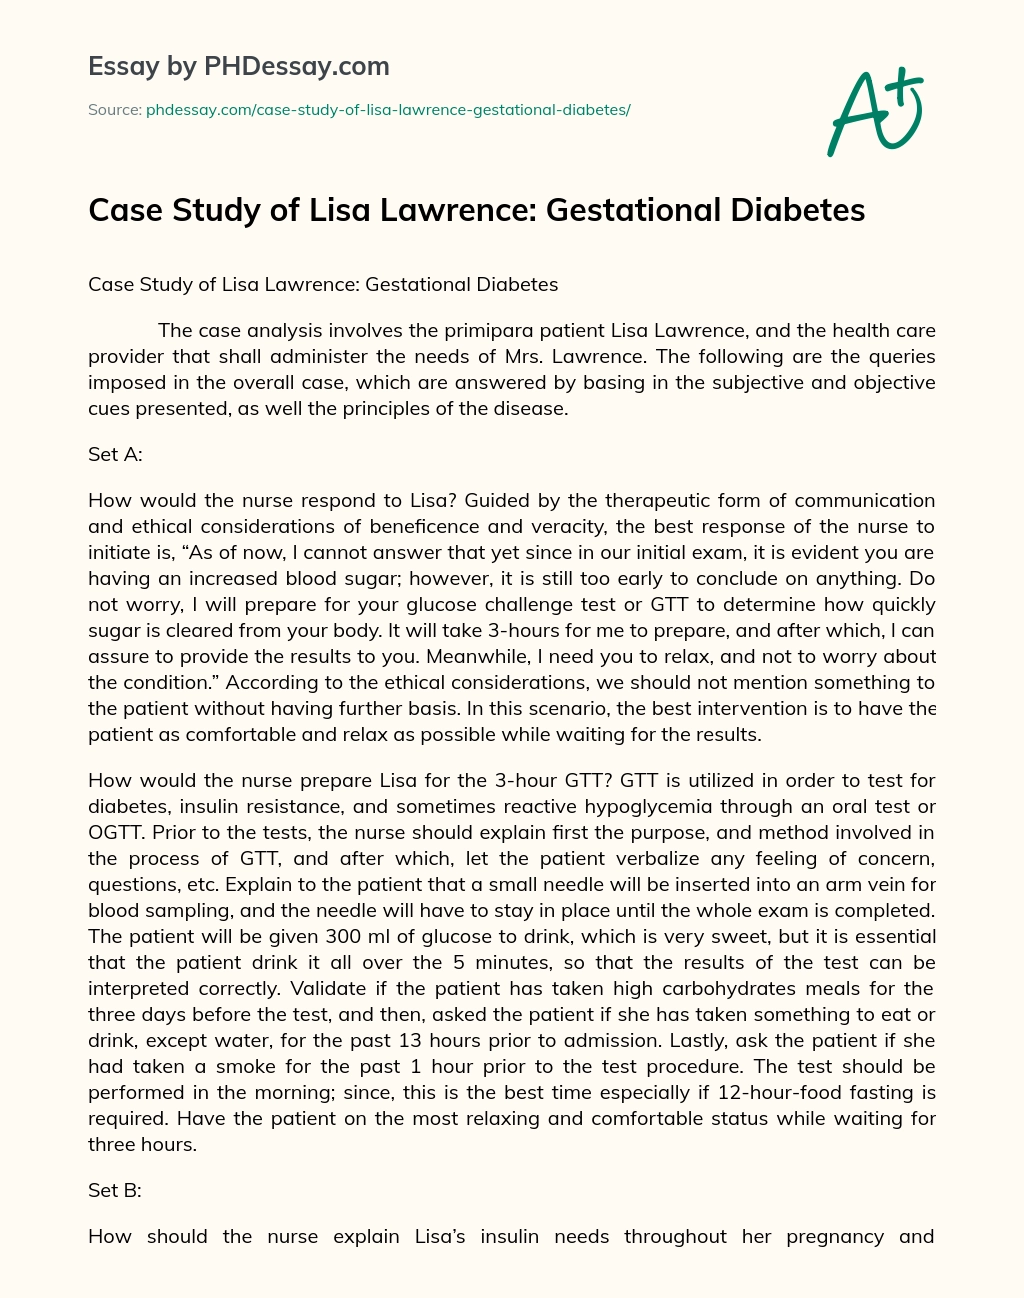 Case study of Lisa Lawrence: gestational diabetes essay